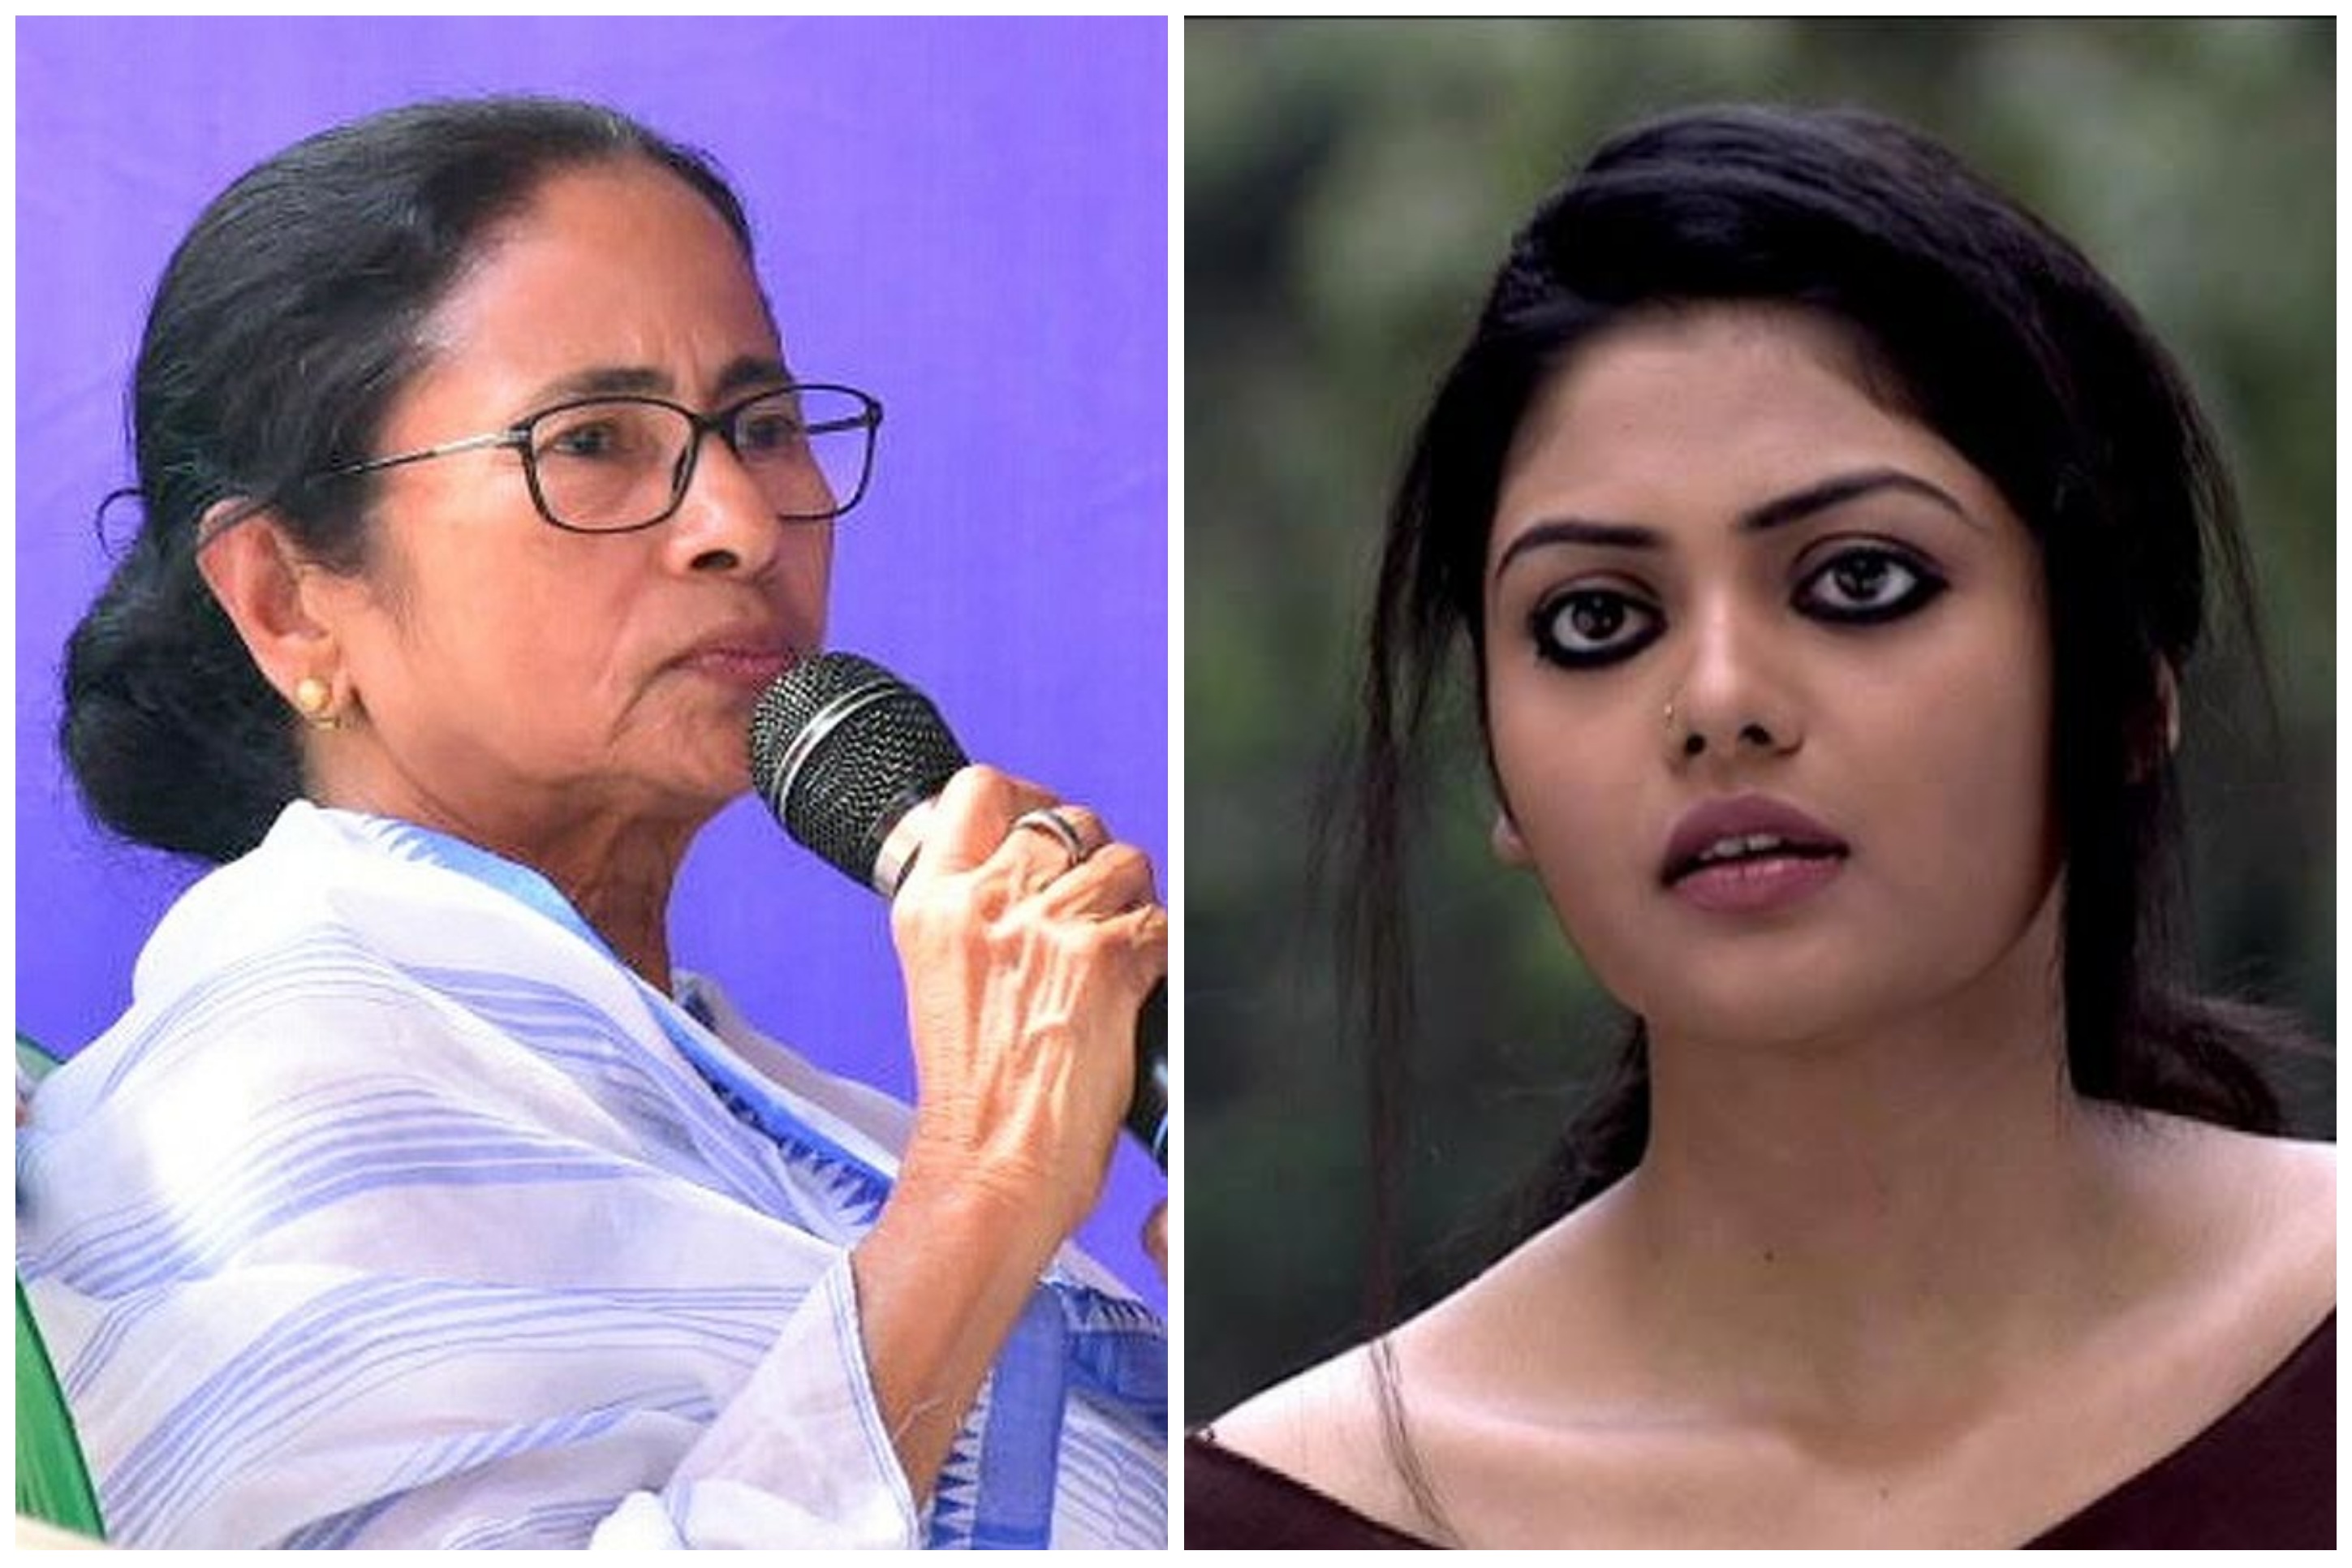 Mamata Banerjee supports actress Saayoni Ghosh in hert tussle against BJP’s Tathagata Roy